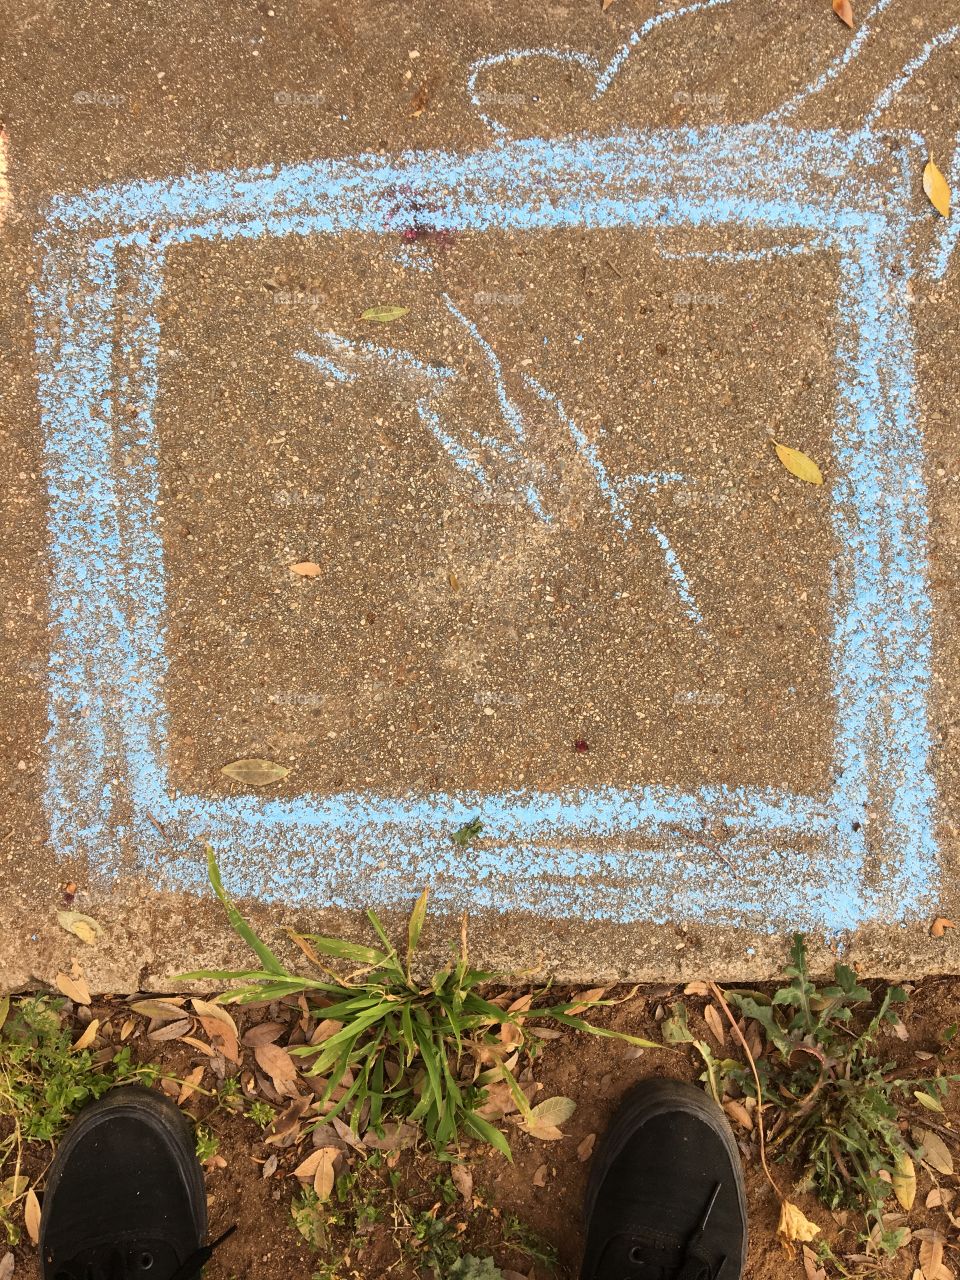 Sidewalk chalk art